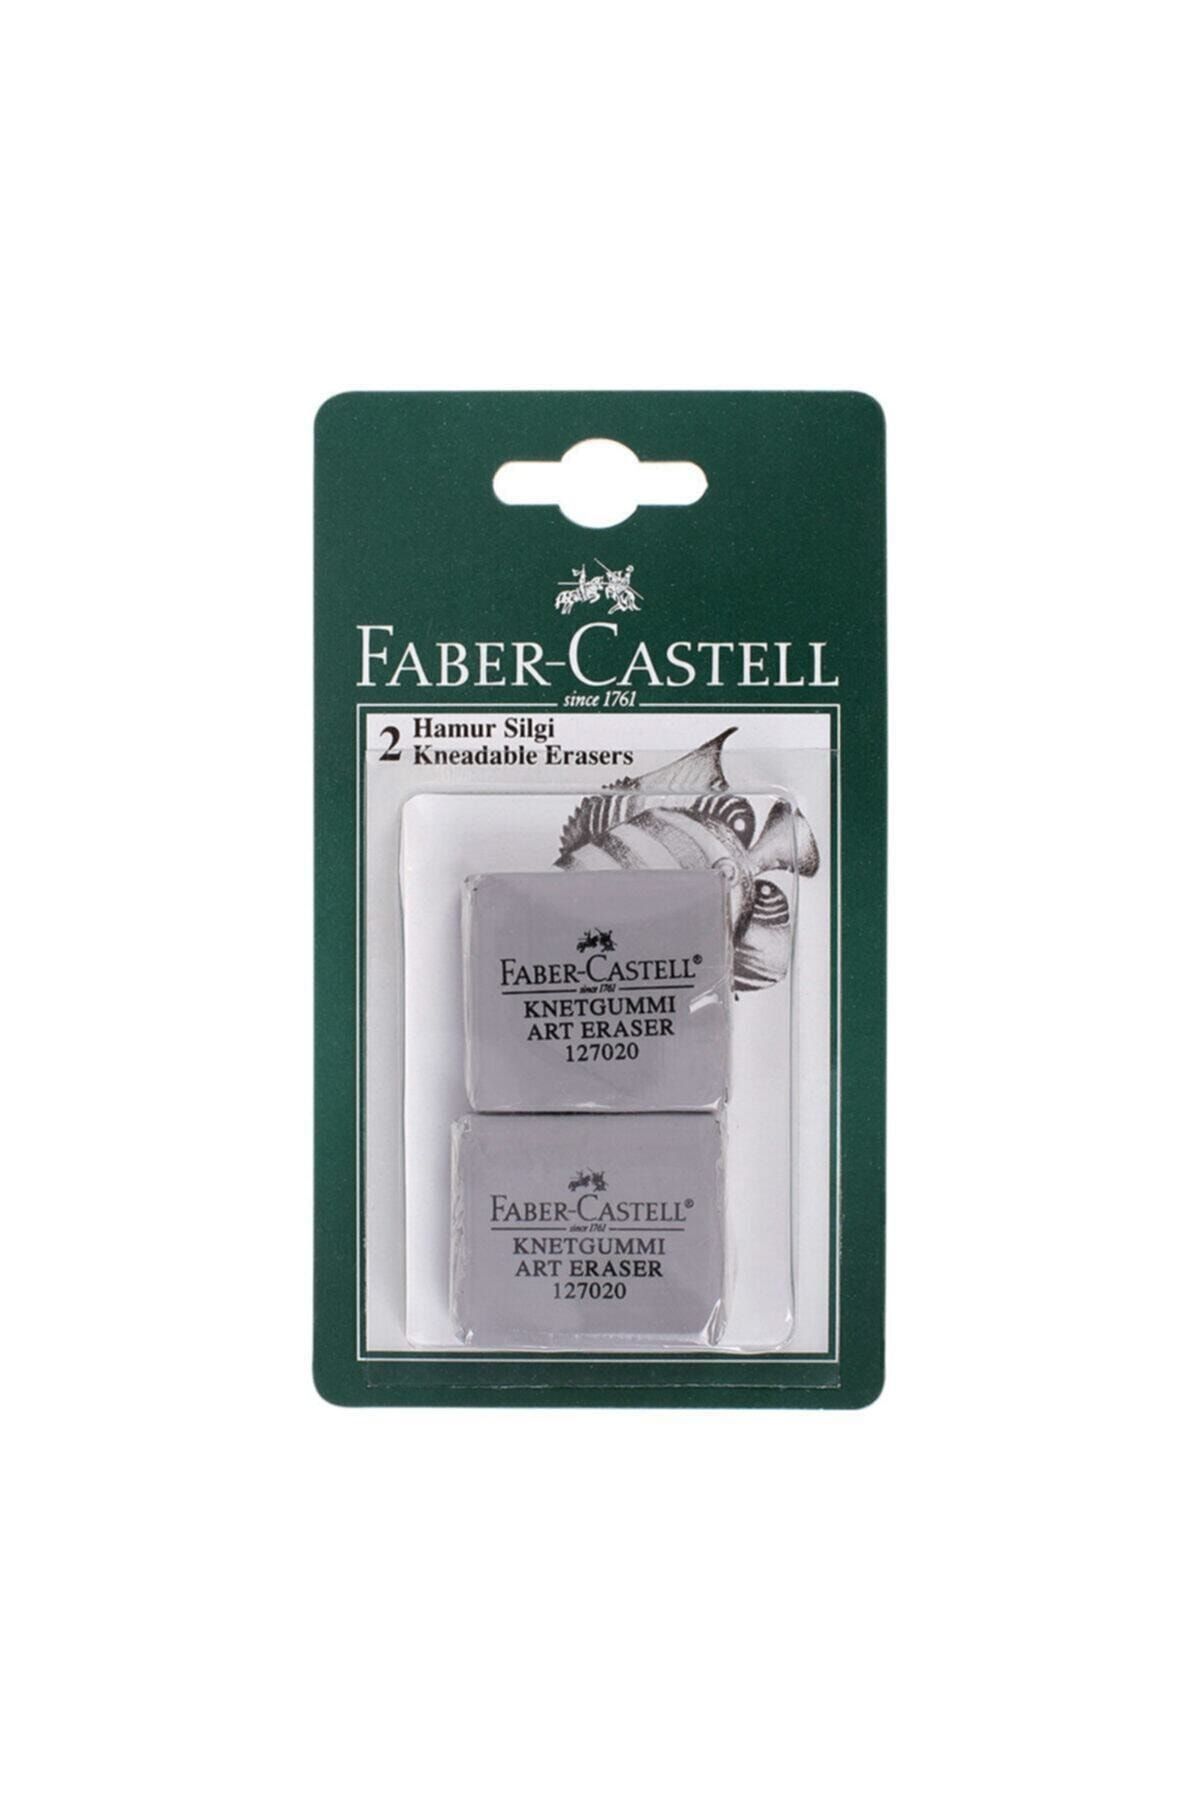 Faber Castell 2 Hamur Silgi